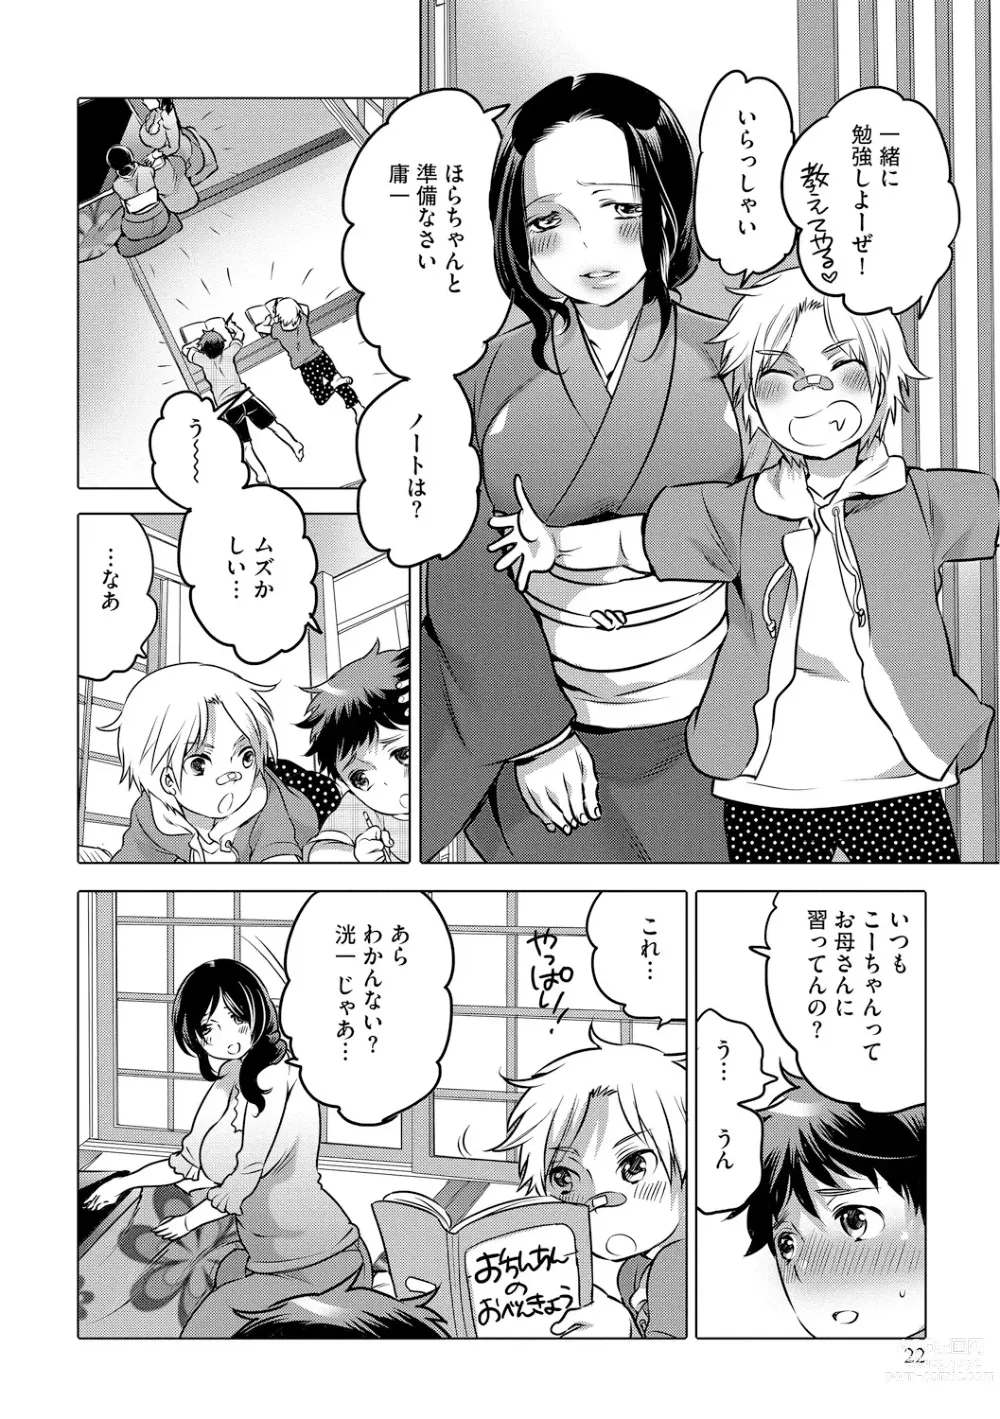 Page 22 of manga Futanari Onee-chan wa Bokura no Omocha  - FUTANARI SISTER IS OUR TOYS